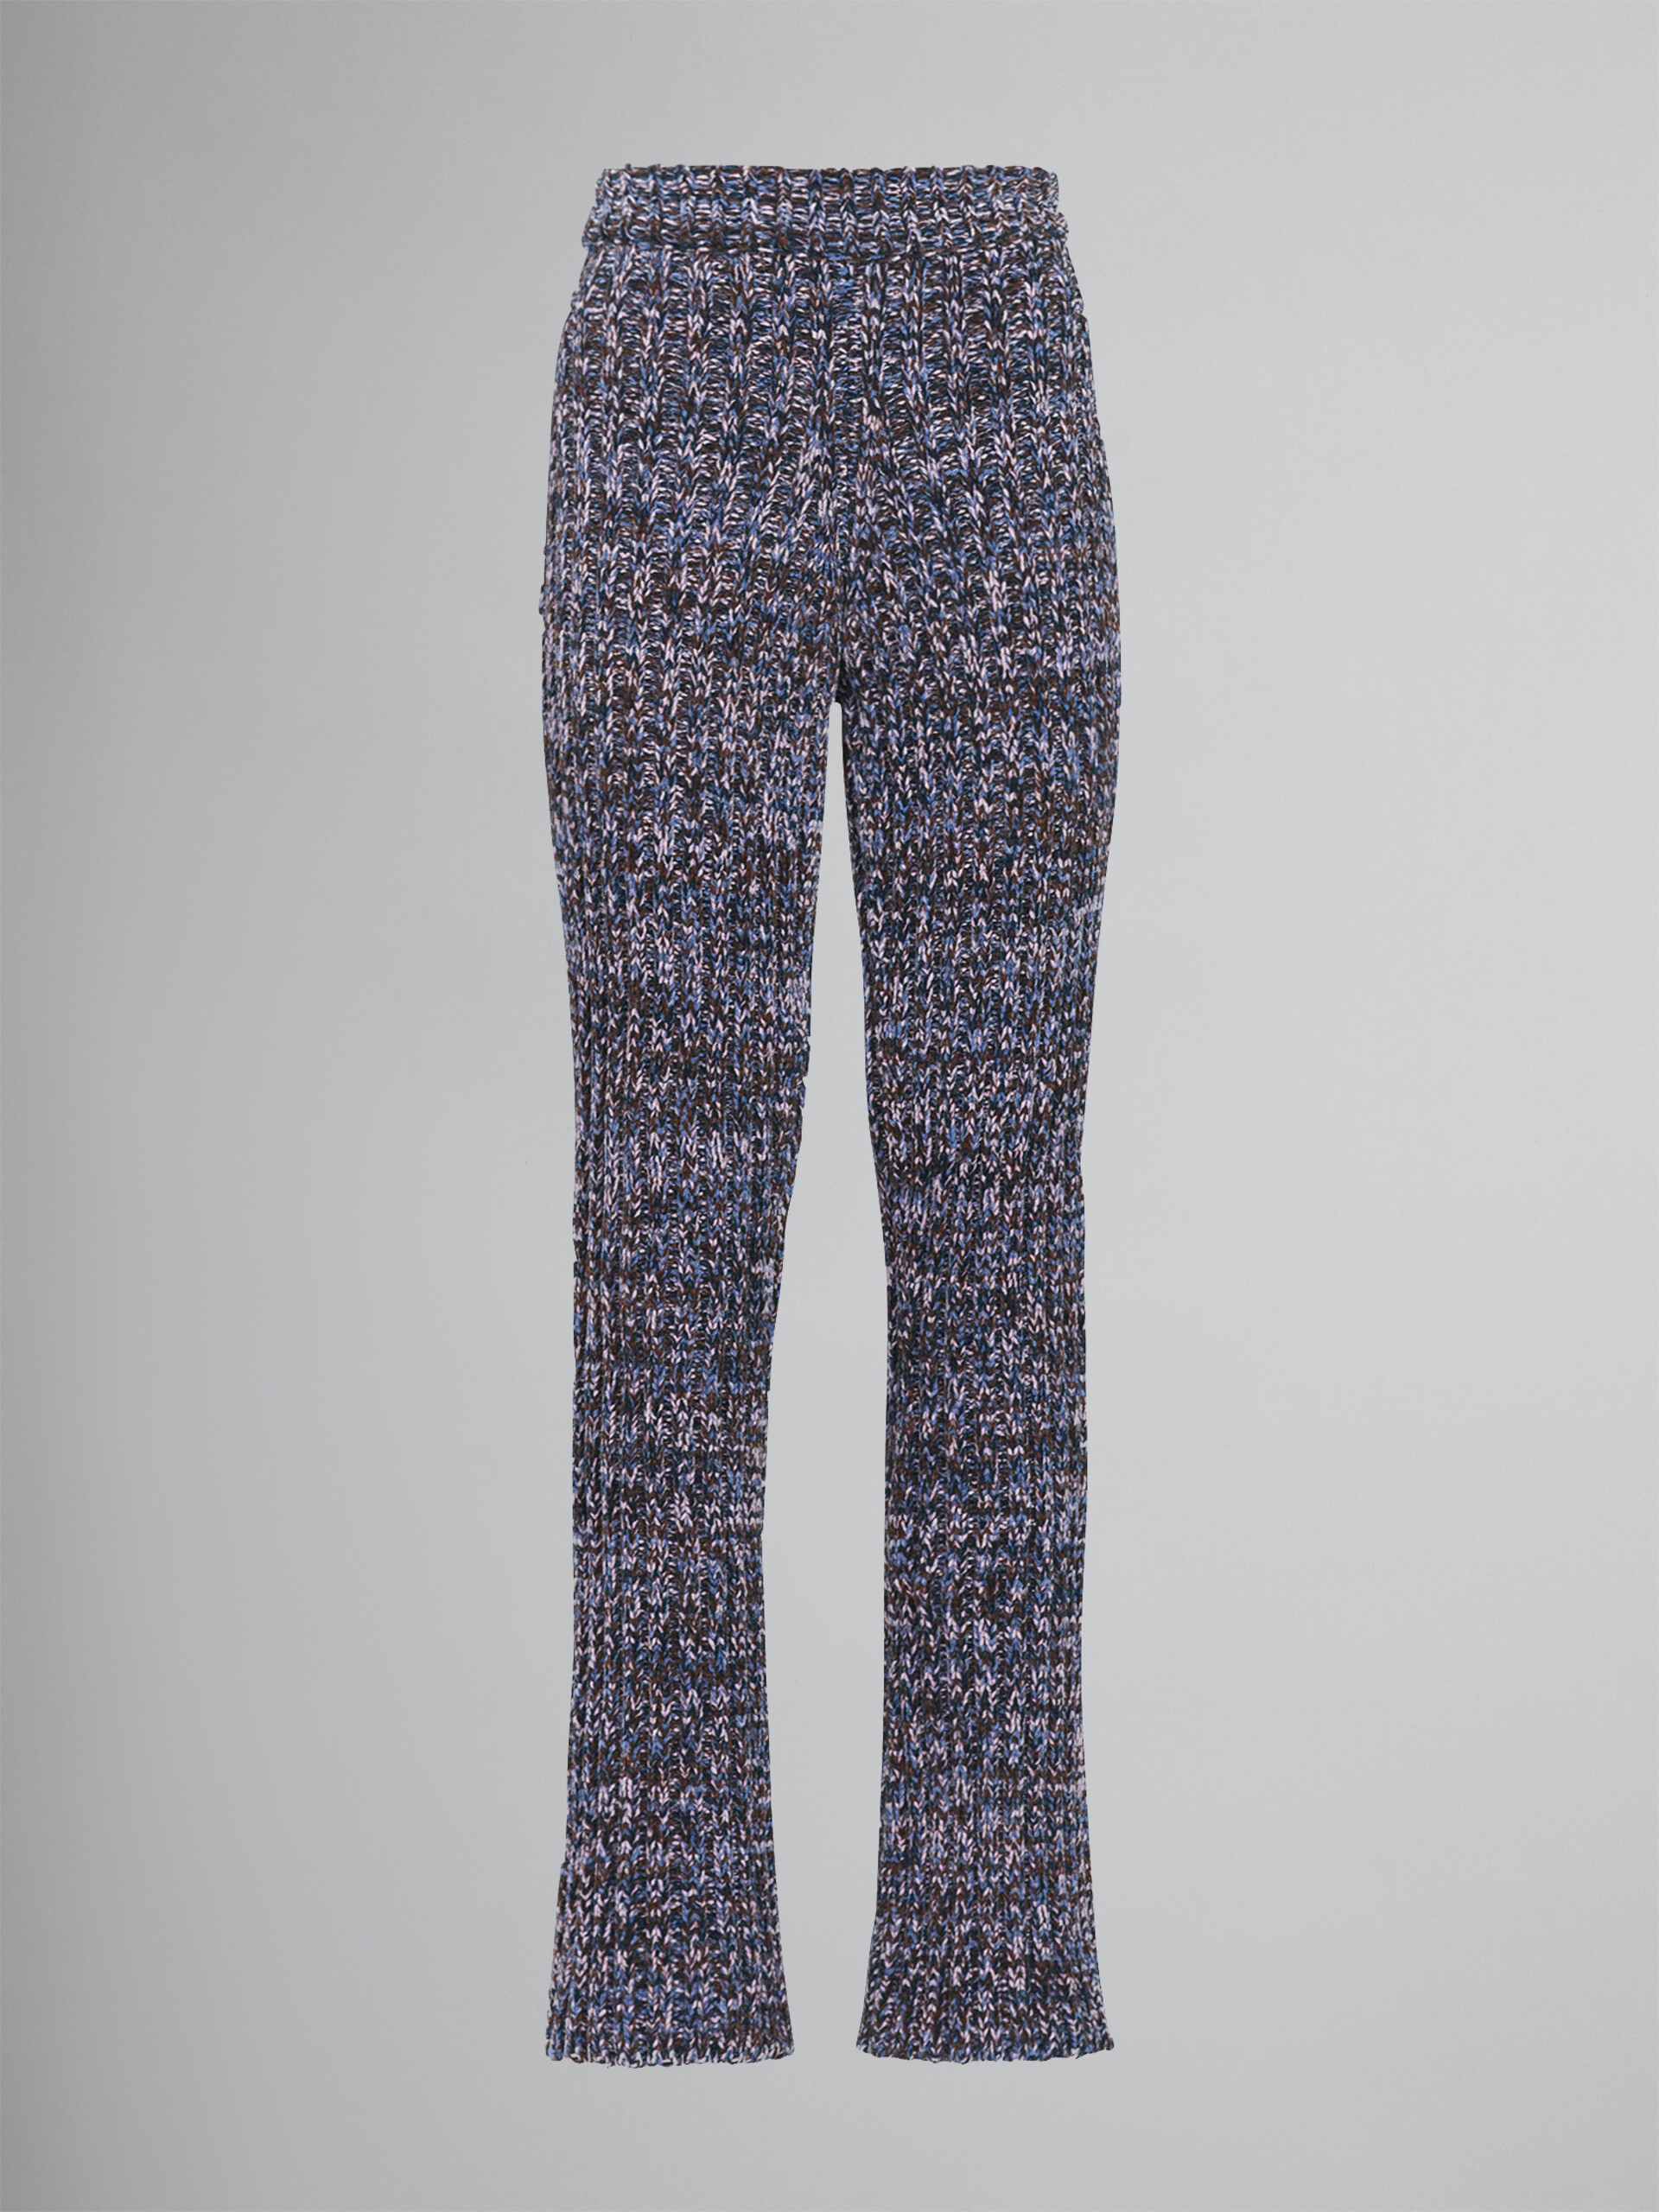 Chenille viscose and cotton pants - Pants - Image 1